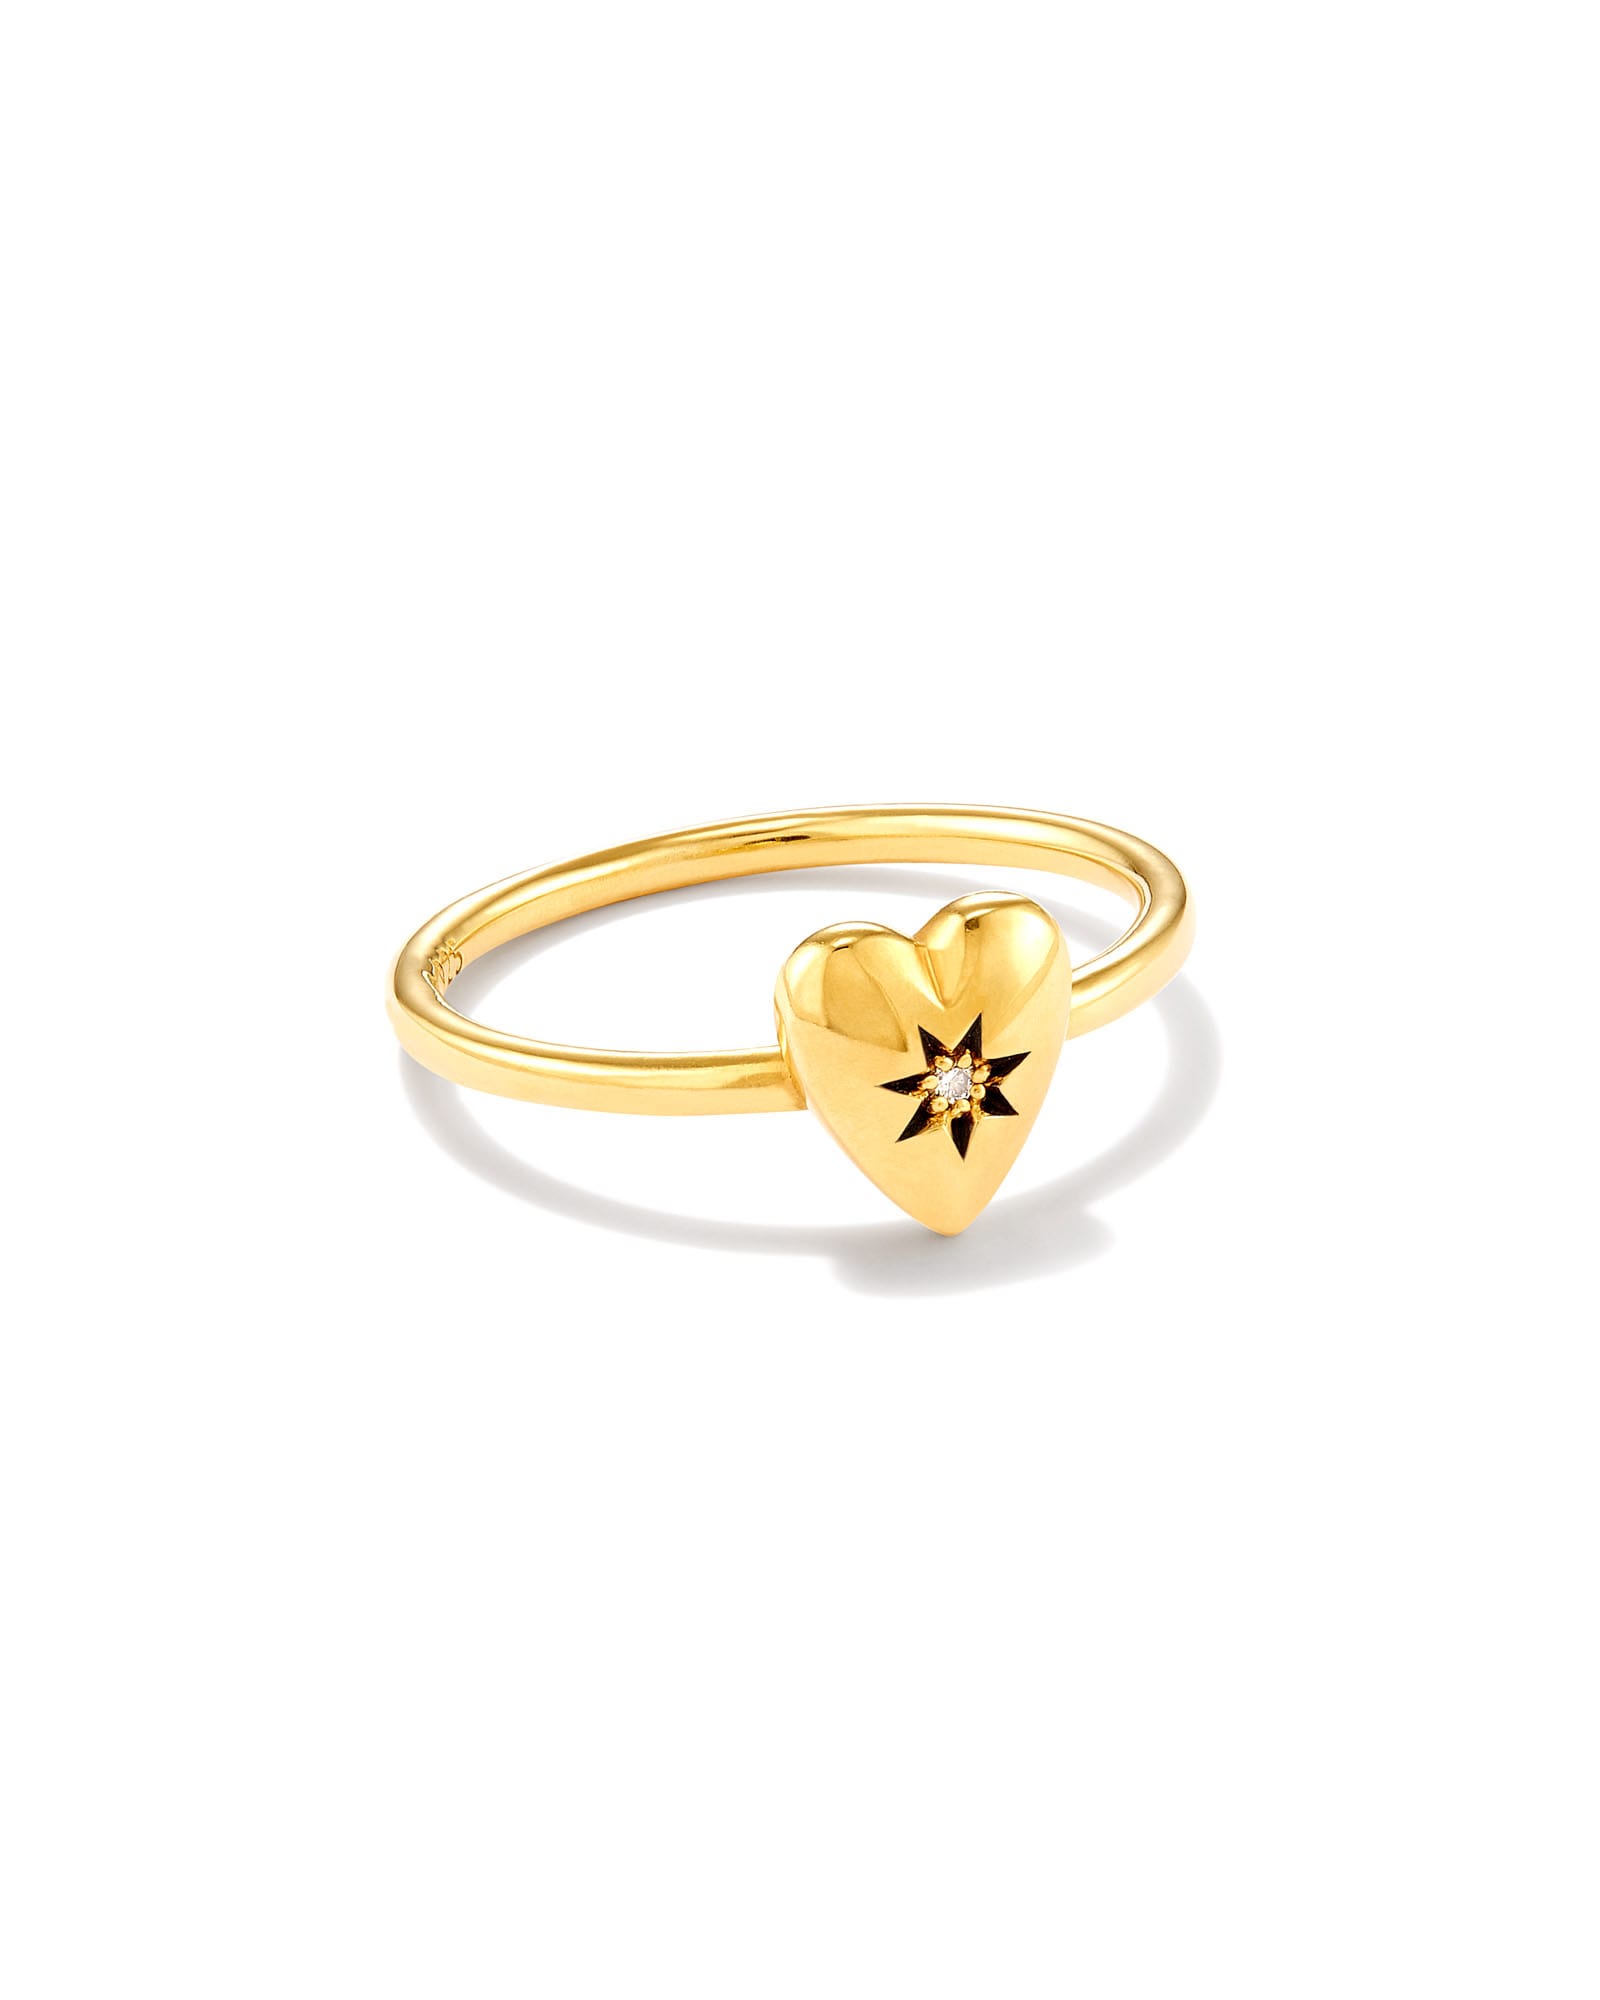 Kendra Scott Angie Heart Bright Cut Band Ring in 18k Yellow Gold Vermeil | Diamonds